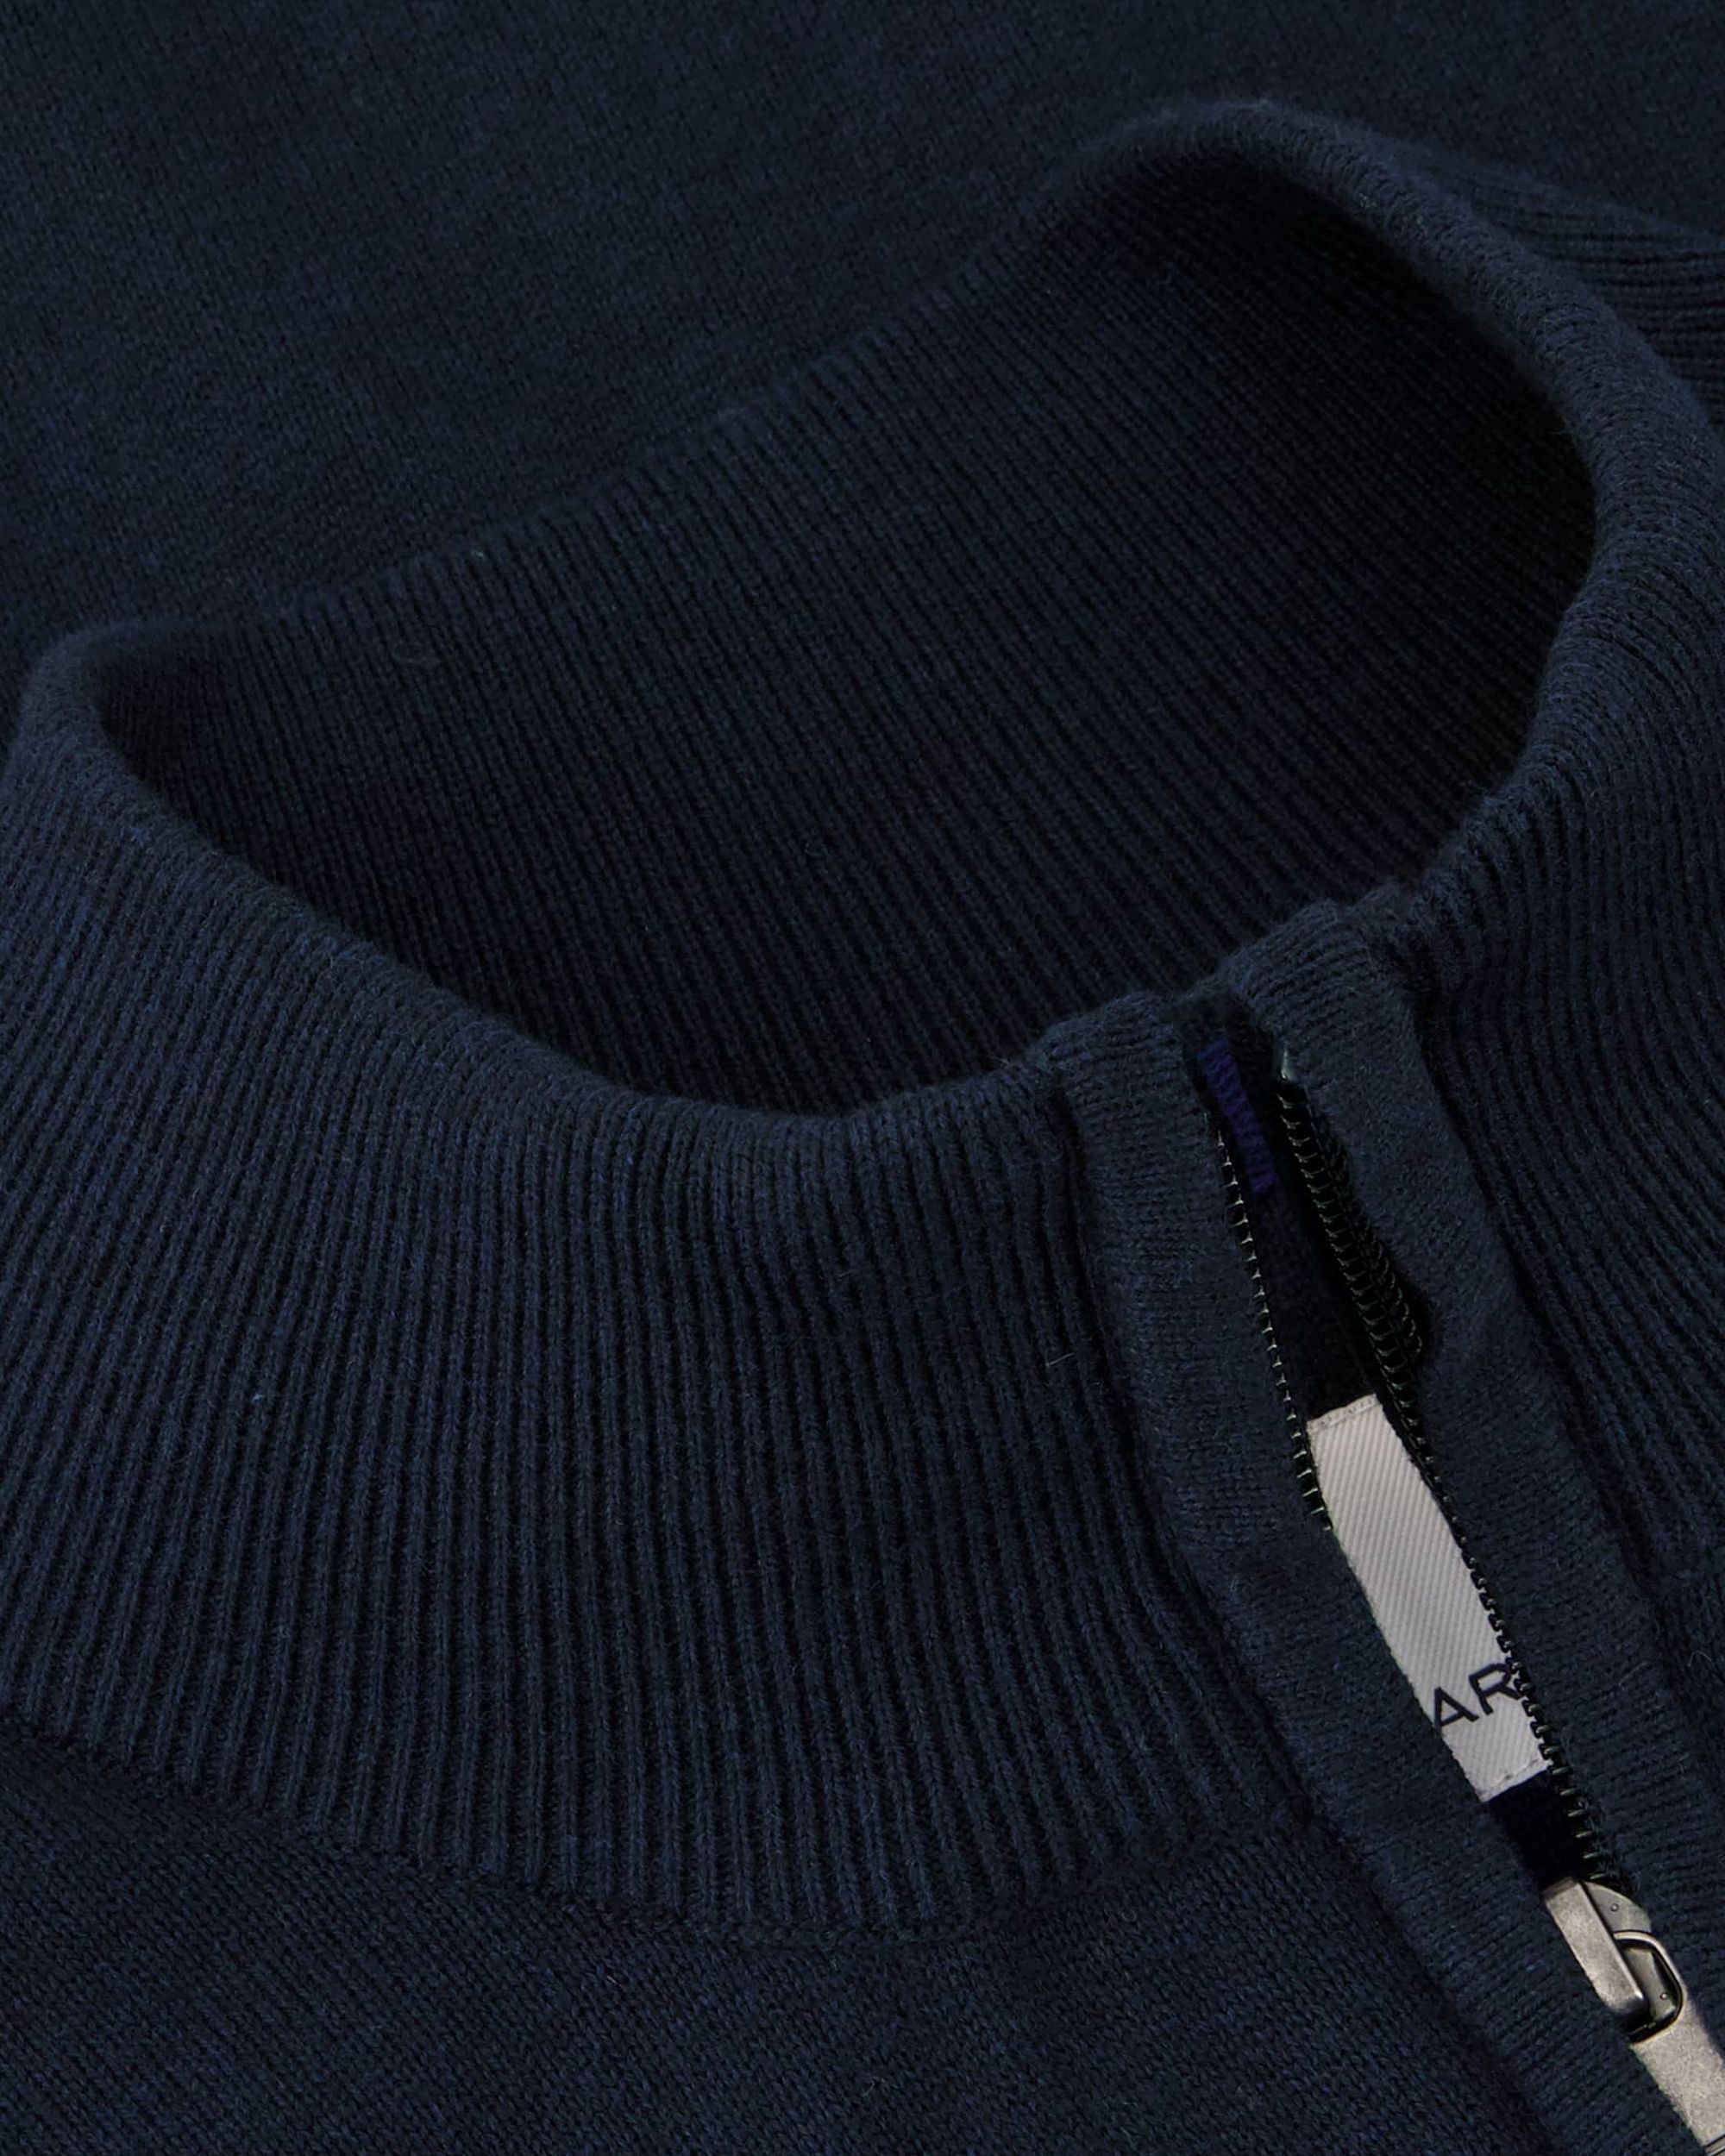 State of Art Trui Vest Donker blauw 095018-001-4XL